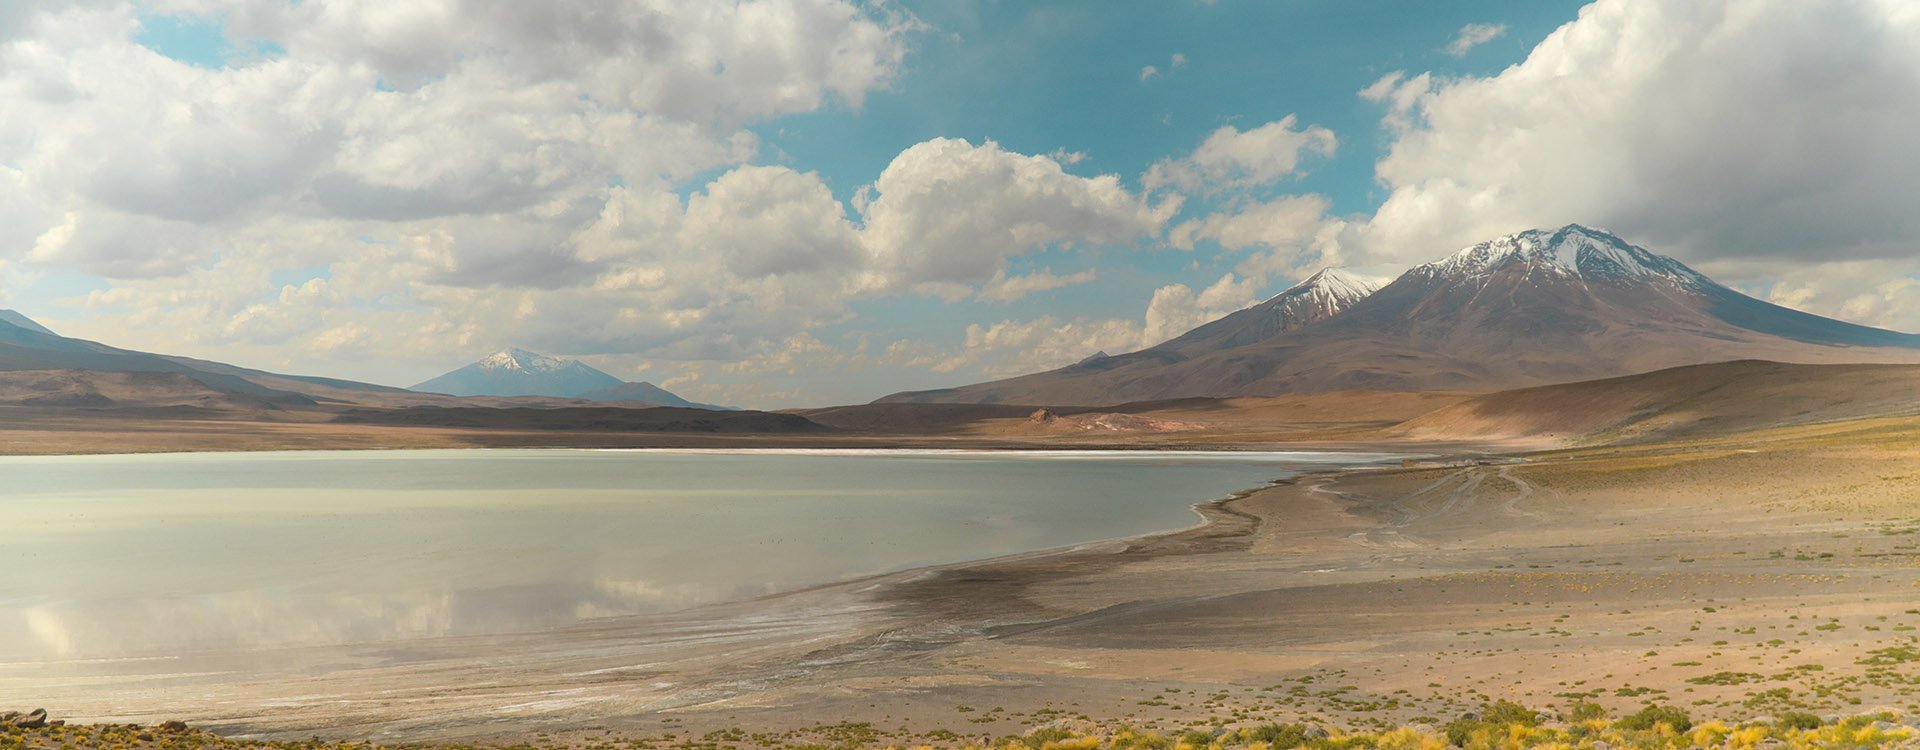 Dramatic mountain landscape wilderness. Dry, barren landscape with beautiful mountain background. Shot in Salt Flats of Uyuni, Bolivia